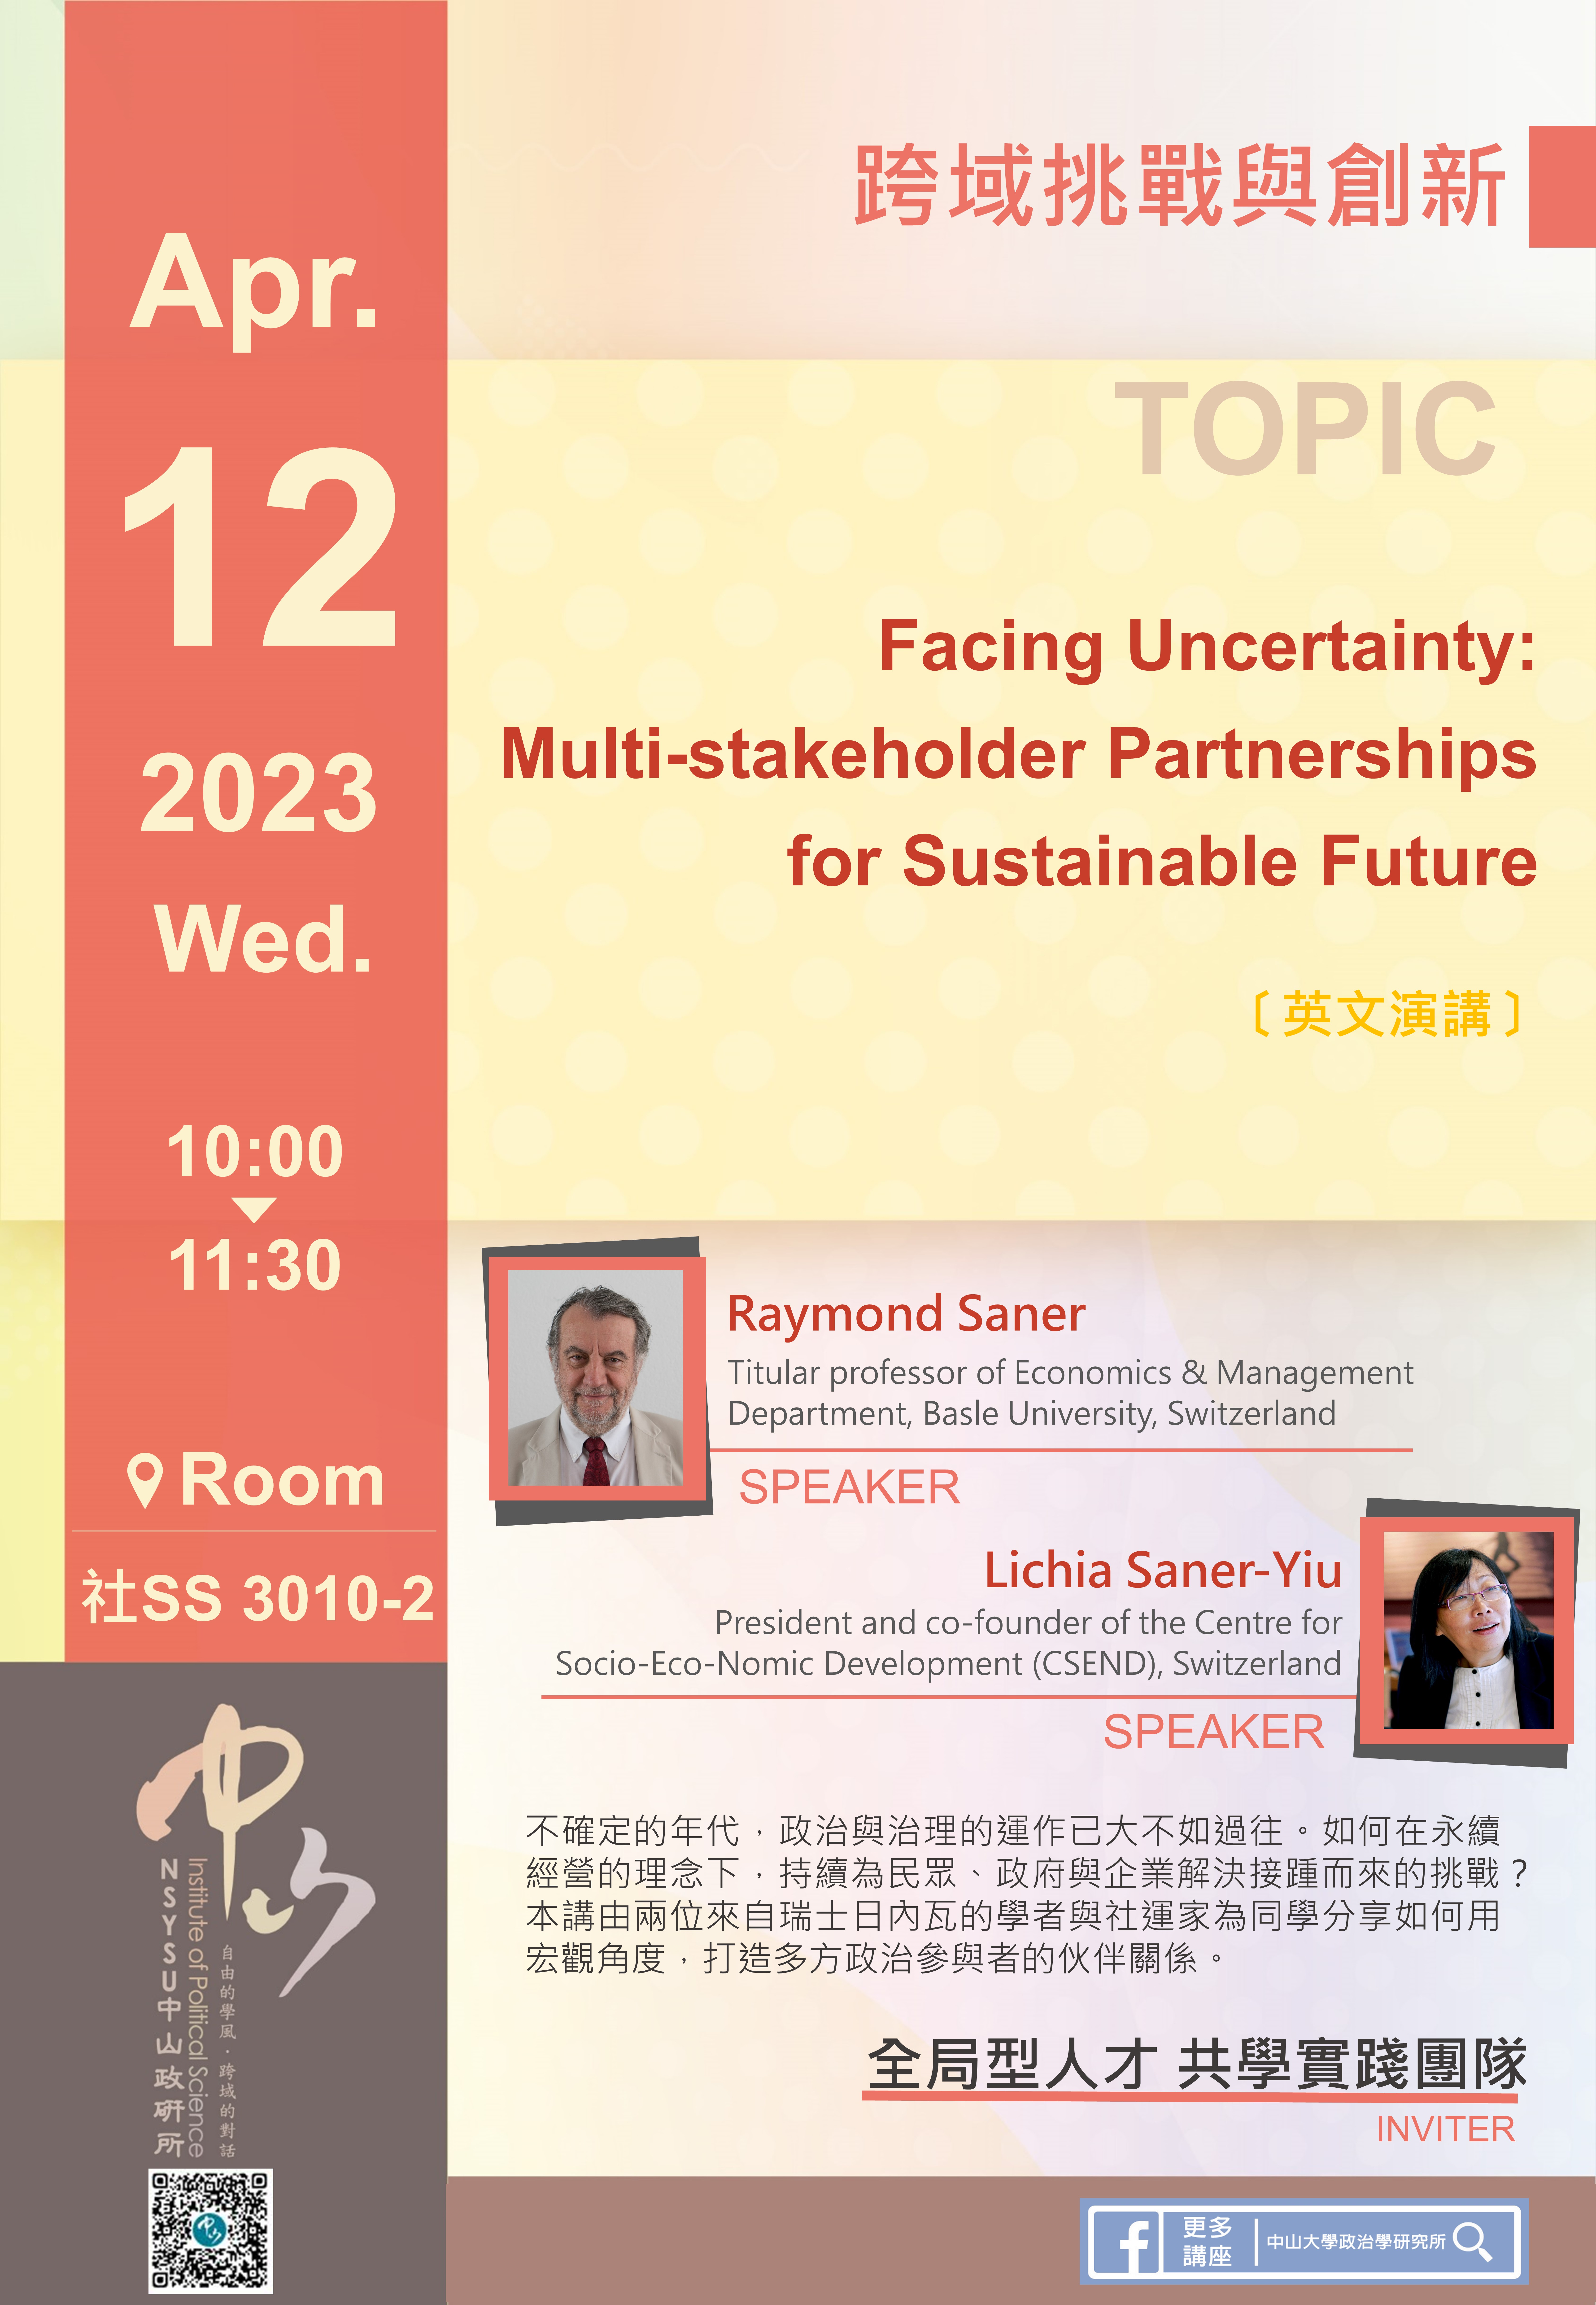 Raymond Saner, Lichia Saner-Yiu : Facing Uncertainty: Multi-stakeholder Partnerships for Sustainable Future